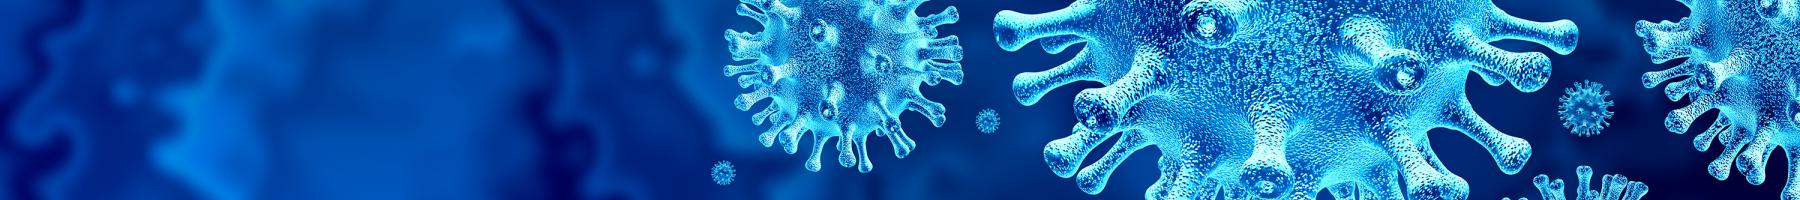 COVID microscopic germs